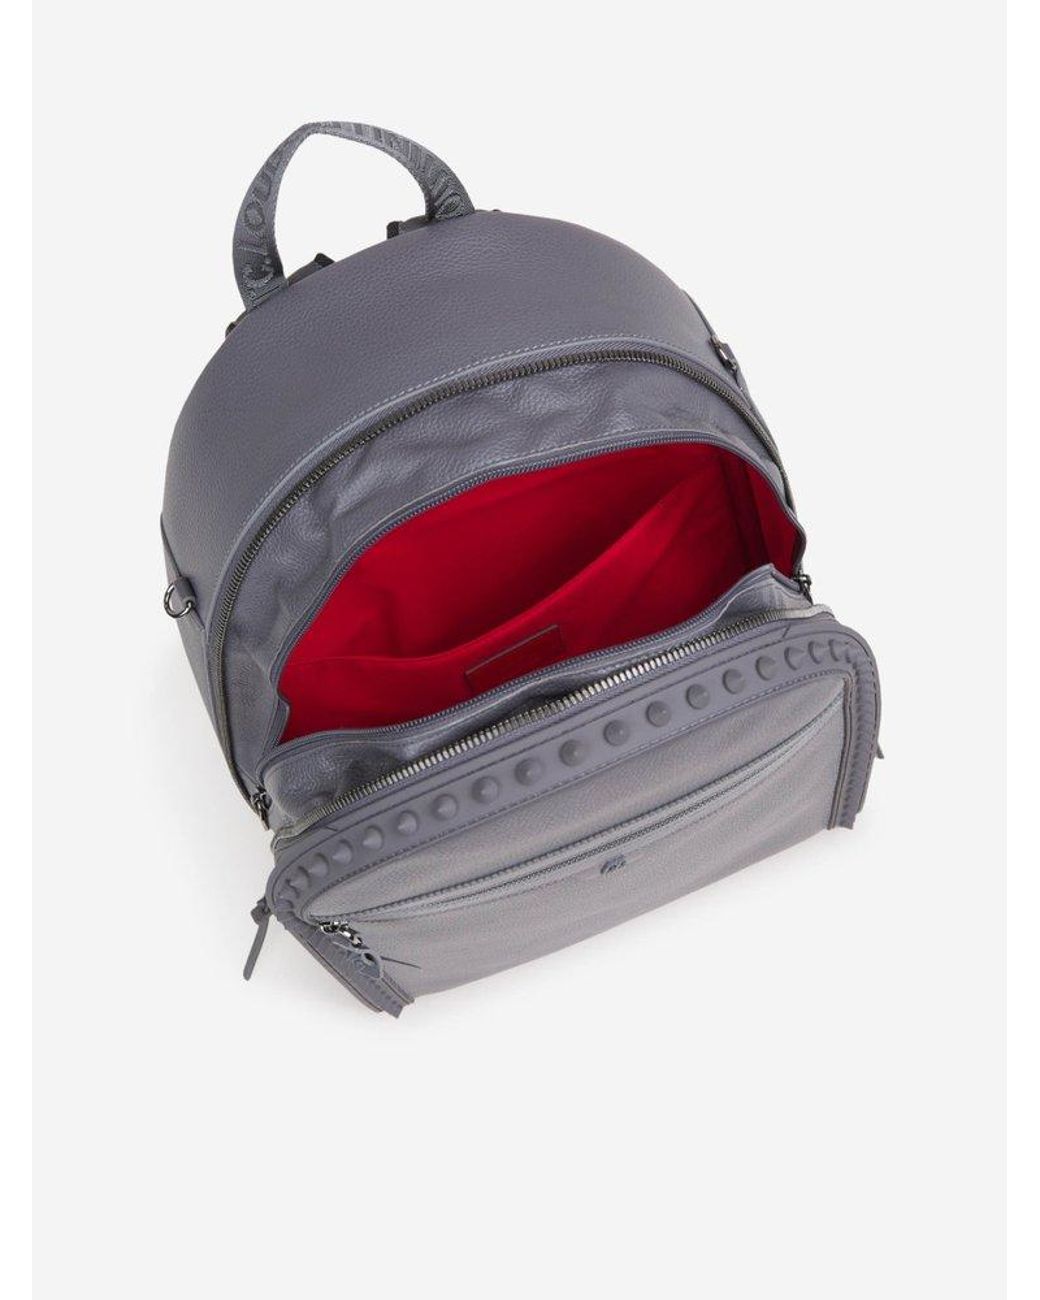 Christian Louboutin Silver Backpack, Jewel Encrusted Rucksack, Worn Once,  Sample